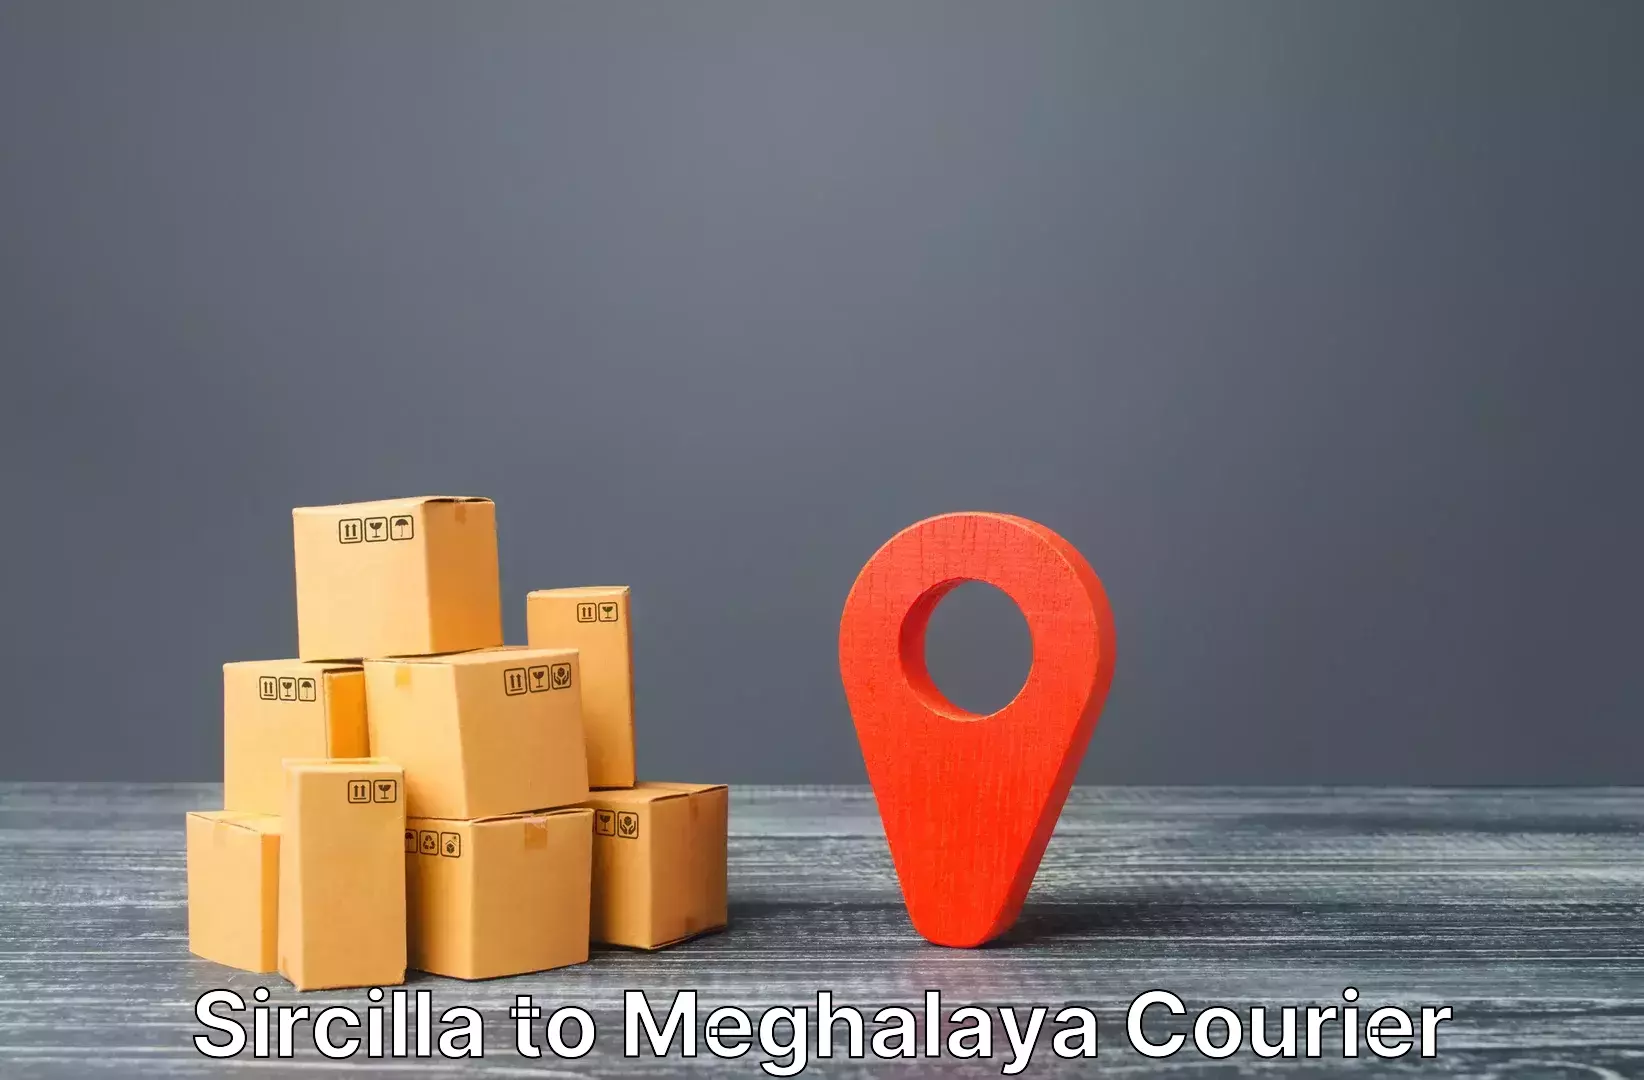 Same day luggage service Sircilla to Meghalaya